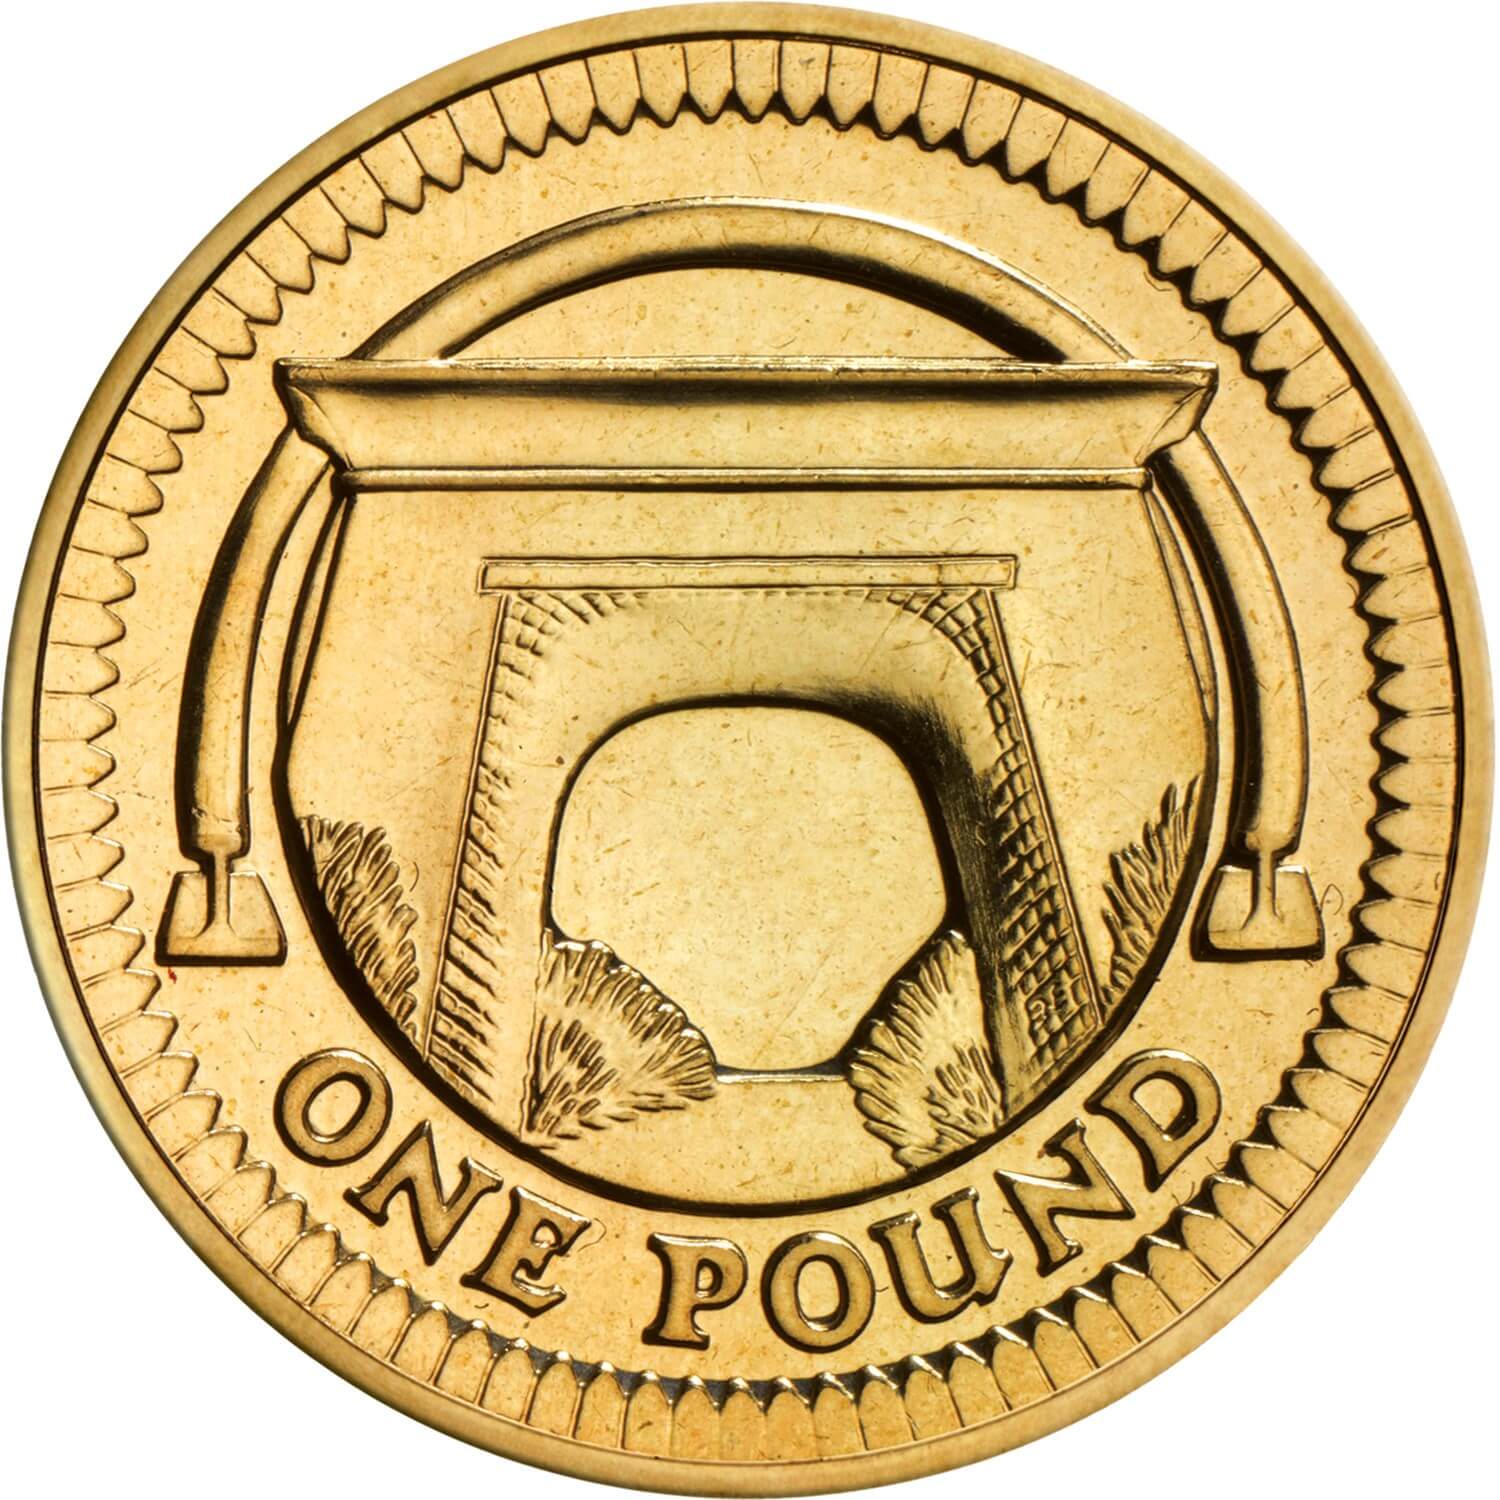 2006-one-pound_rev-coin.jpg